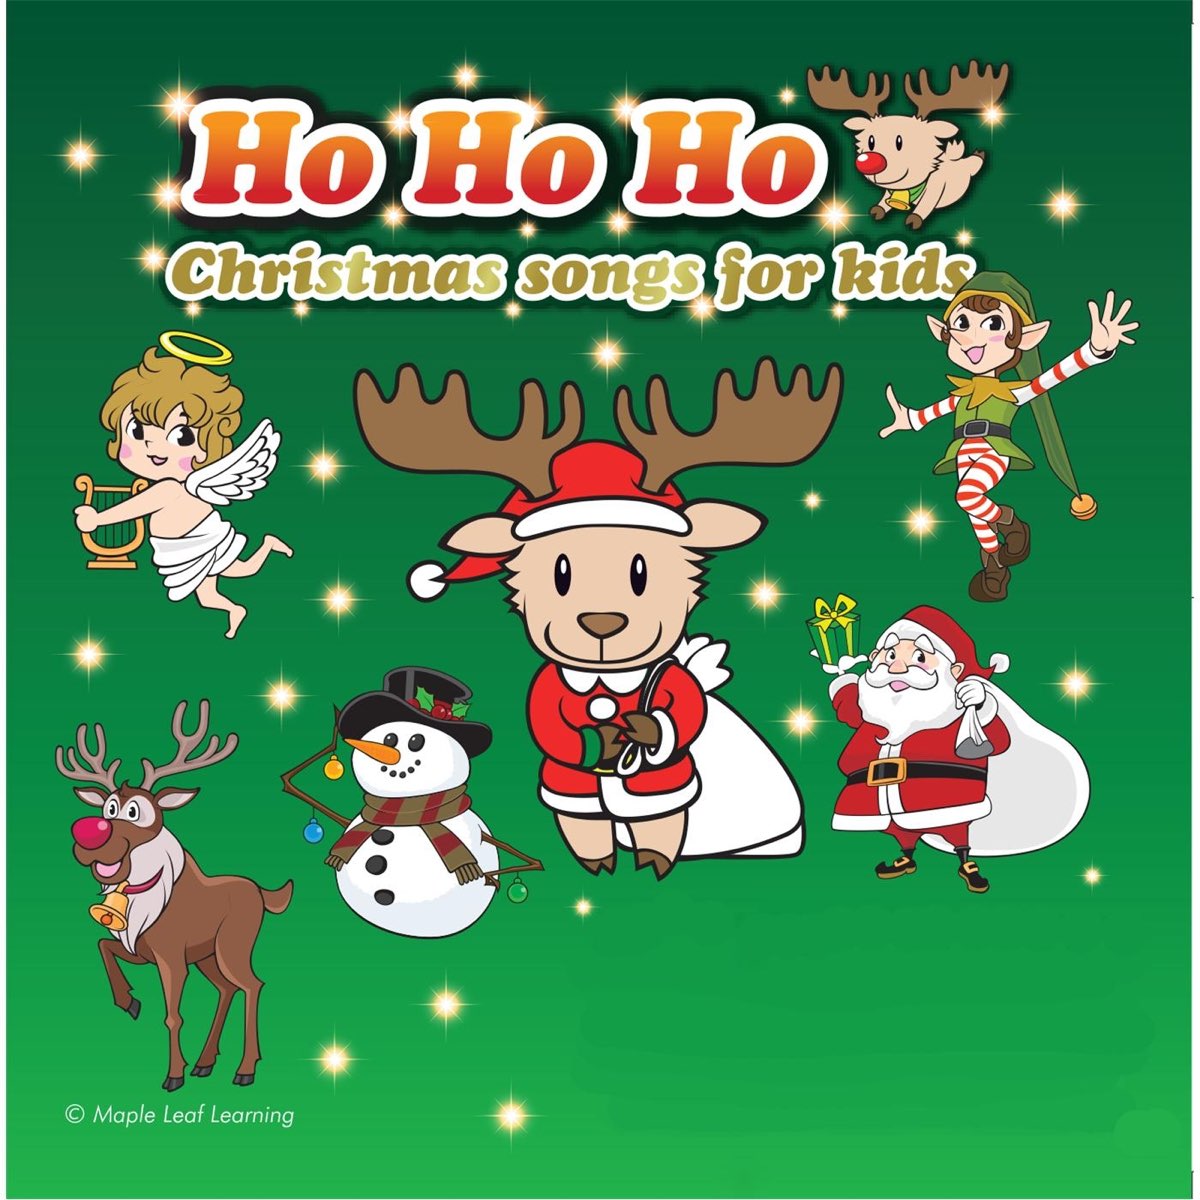 Ho Ho Ho Christmas Songs for Kids  26mins Video Collection 